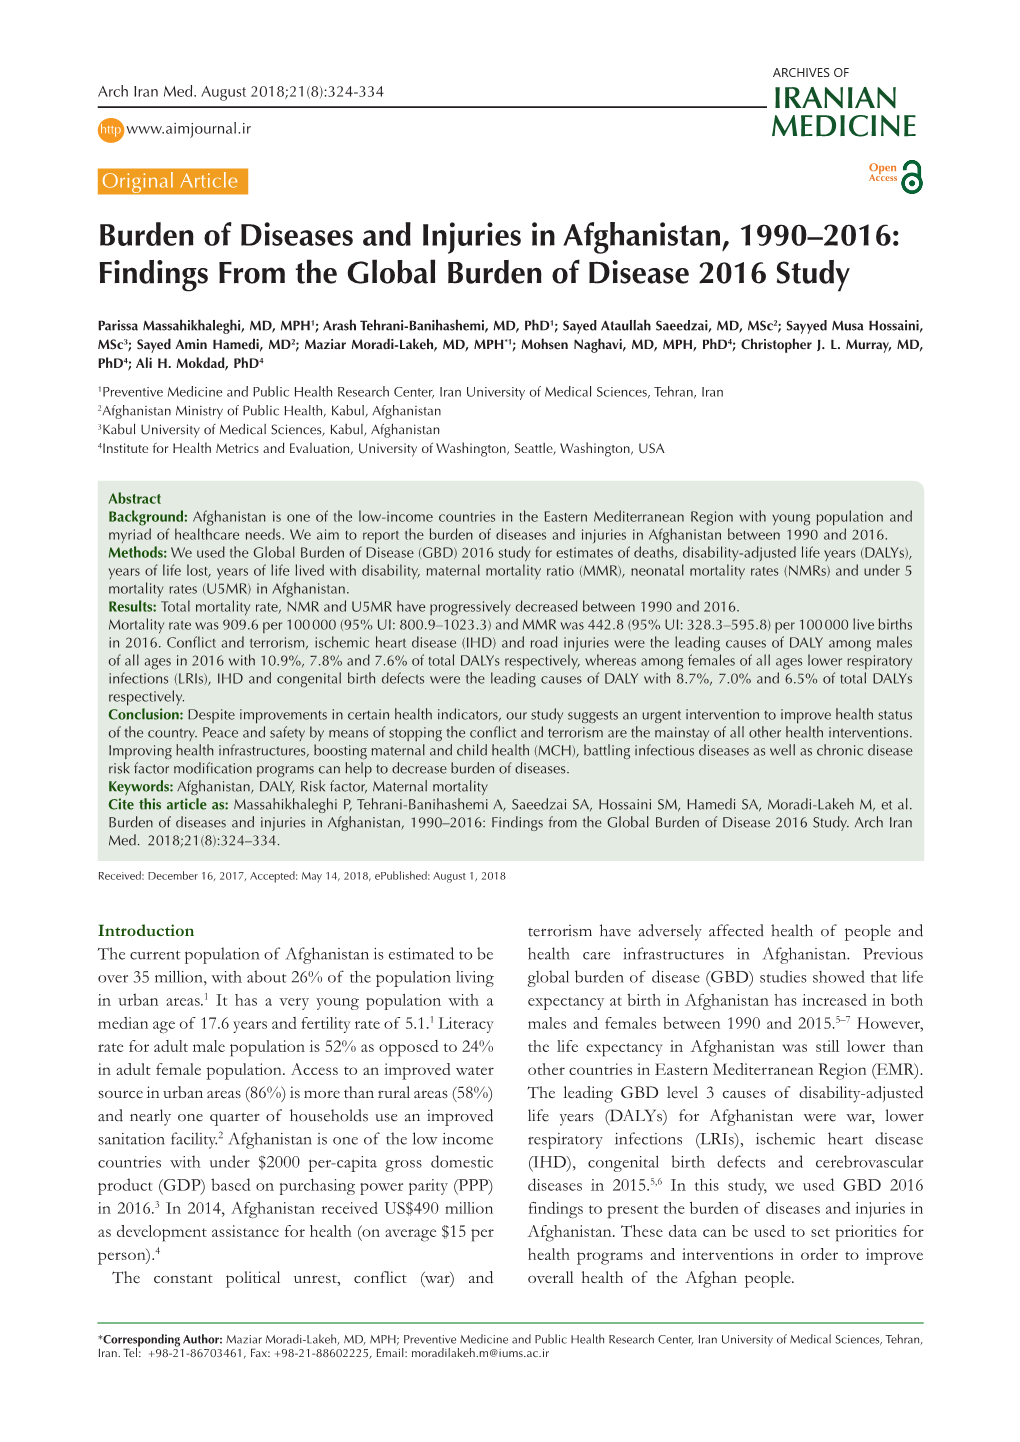 Burden of Diseases and Injuries in Afghanistan, 1990–2016: Findings from the Global Burden of Disease 2016 Study